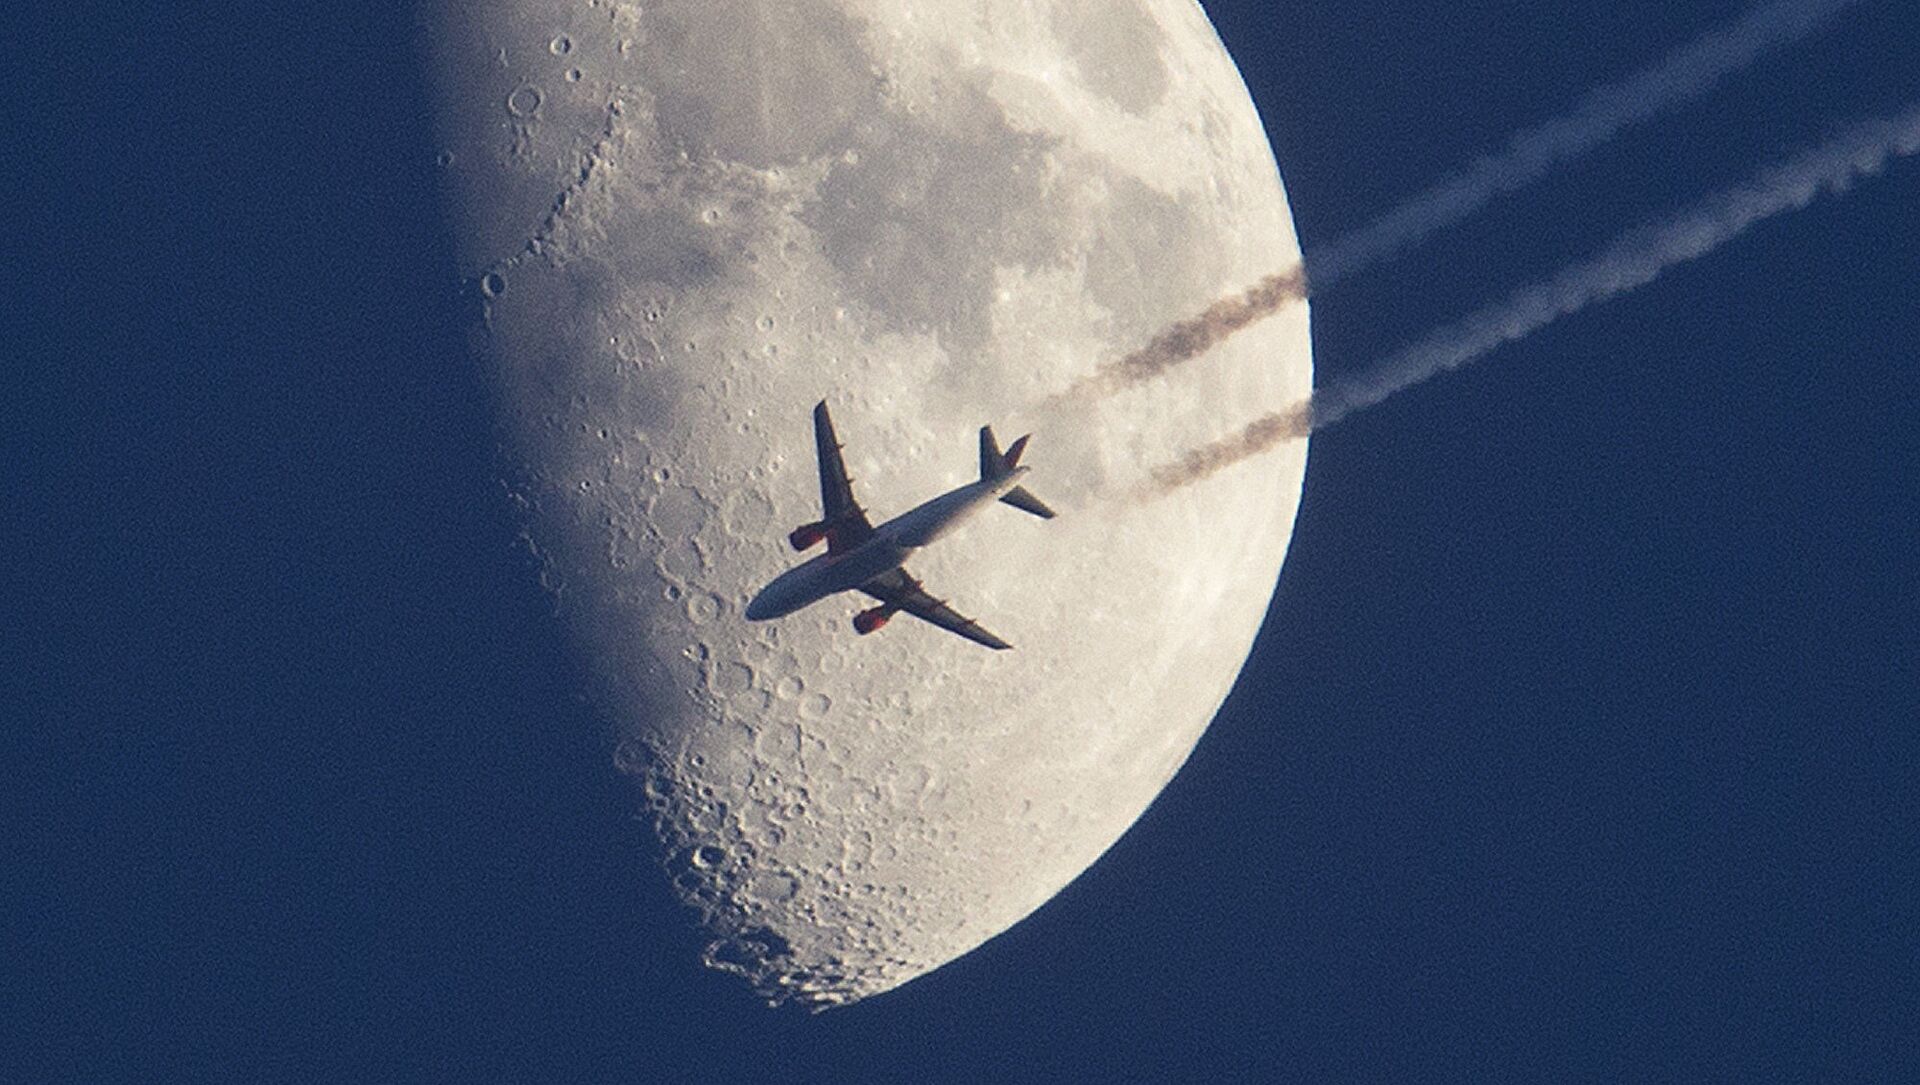 Авион лети поред Месеца. - Sputnik Србија, 1920, 17.05.2021